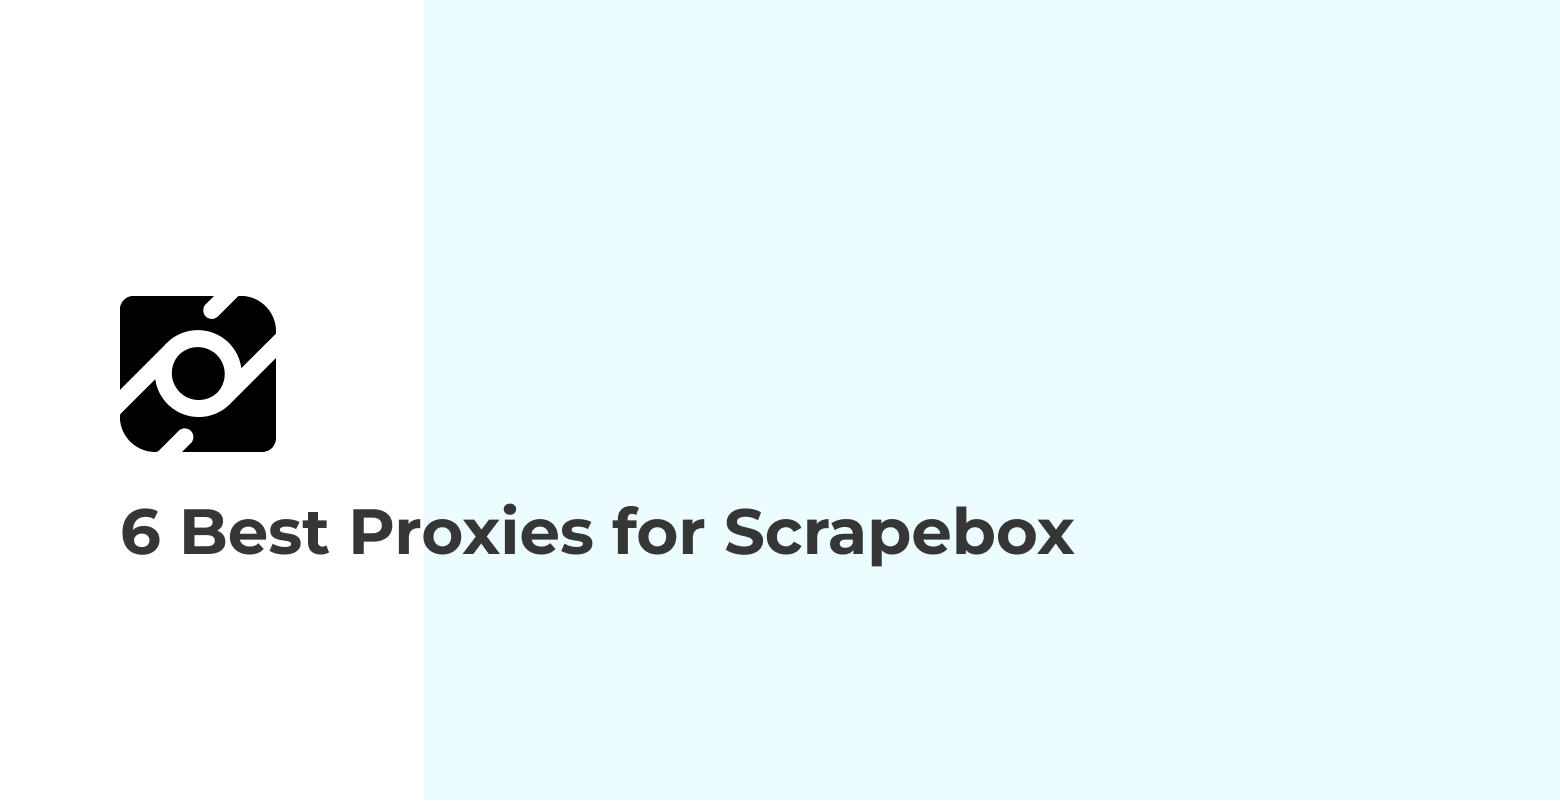 6 Best Proxies for Scrapebox